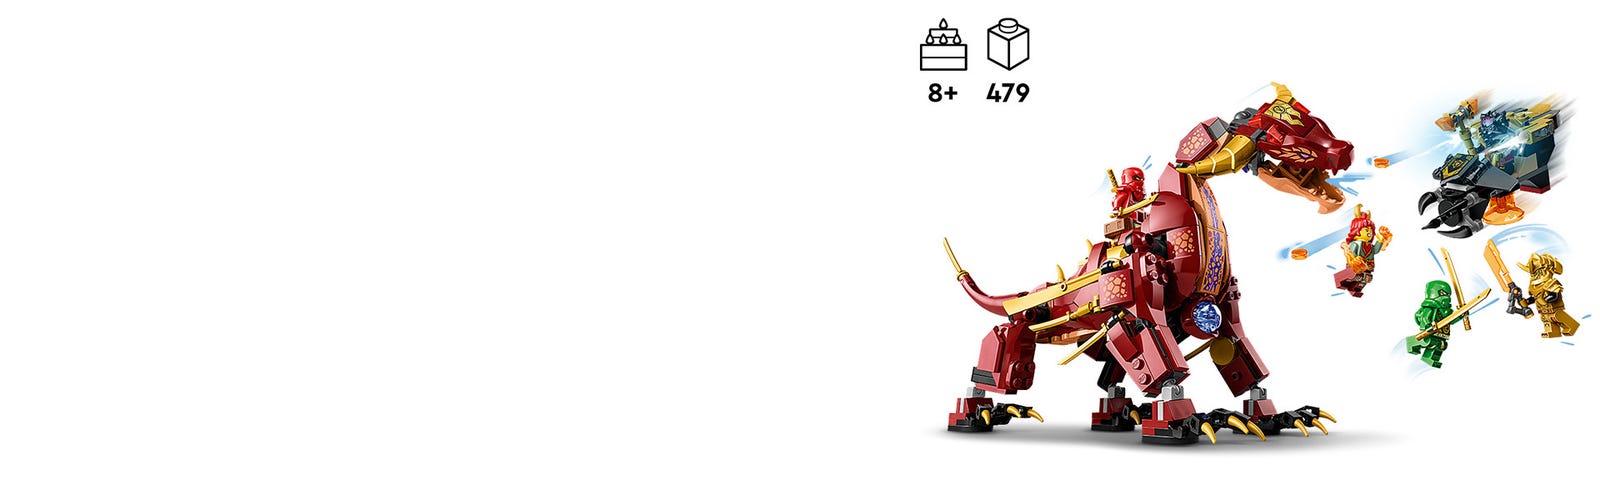 LEGO 71793 NINJAGO Dragone di Lava Transformer Heatwave, Serie